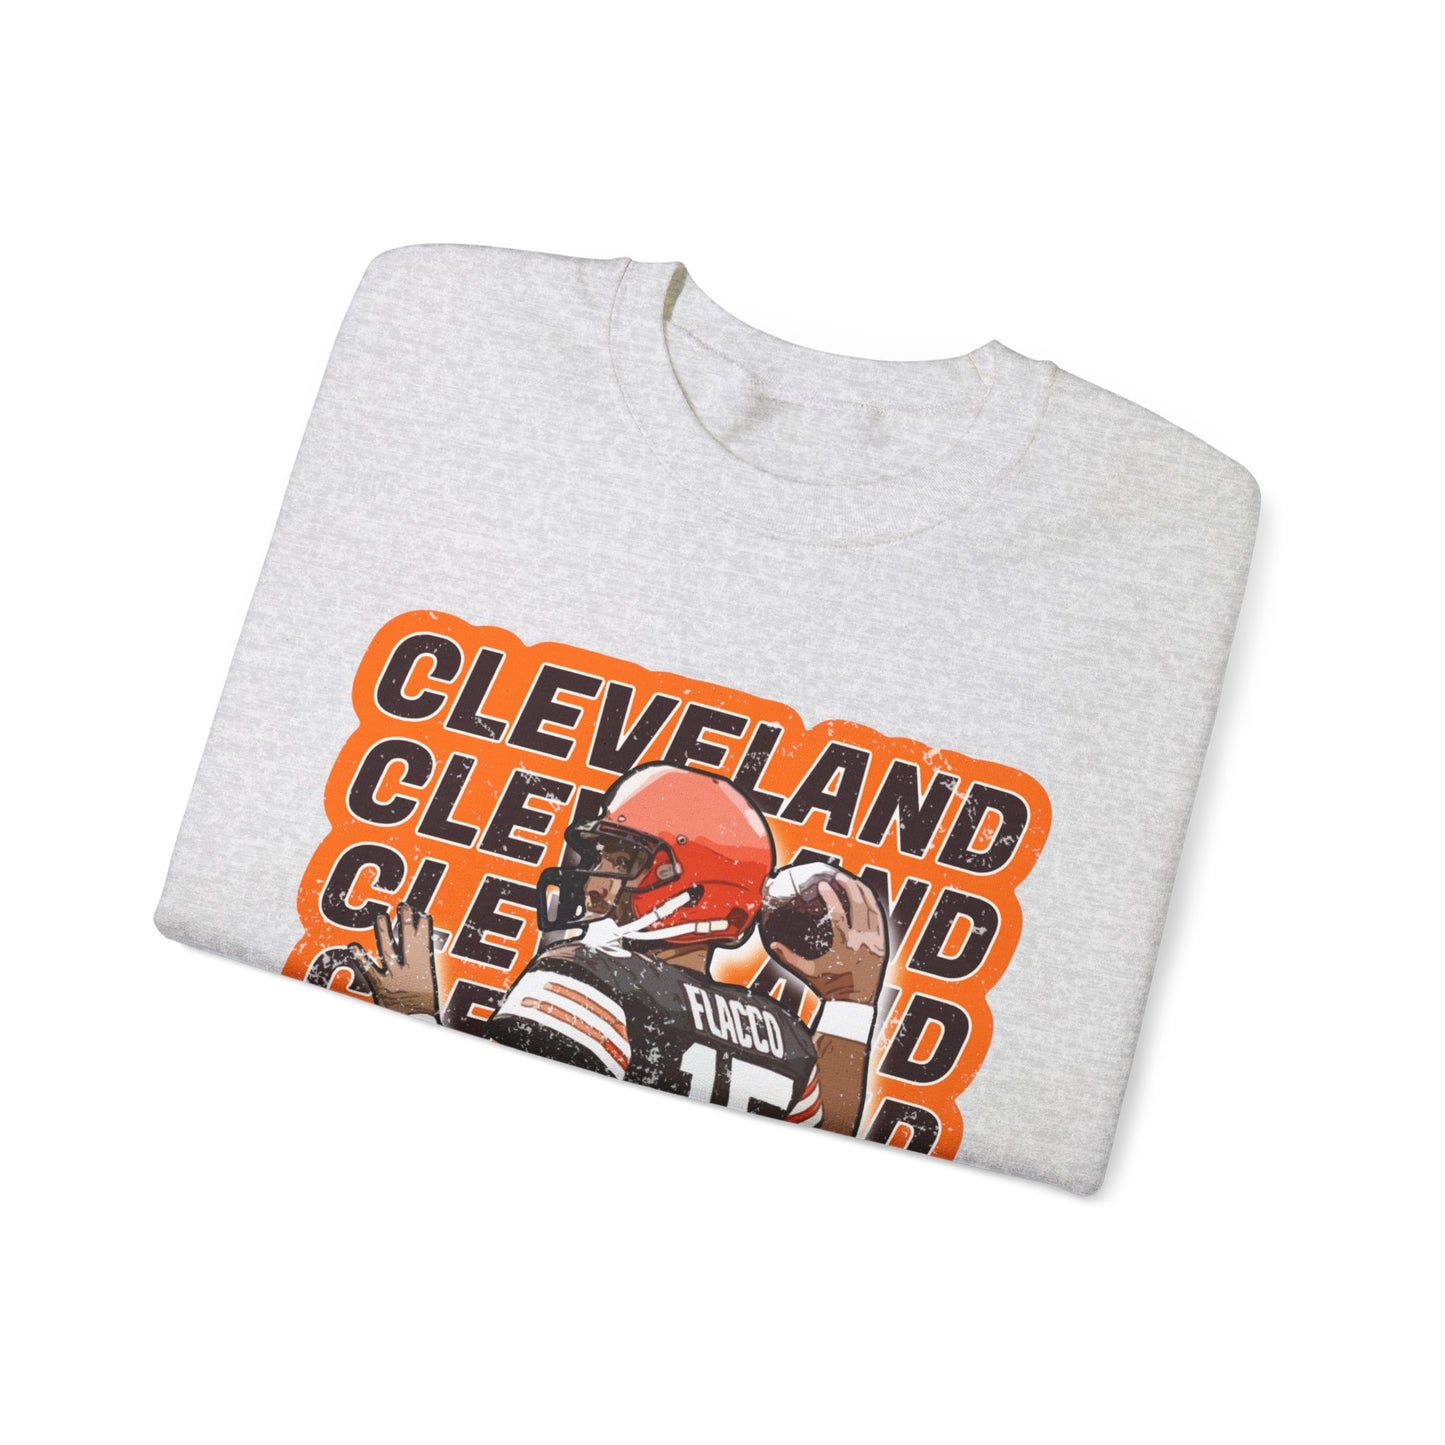 Cleveland Browns Joe Flacco Sweatshirt